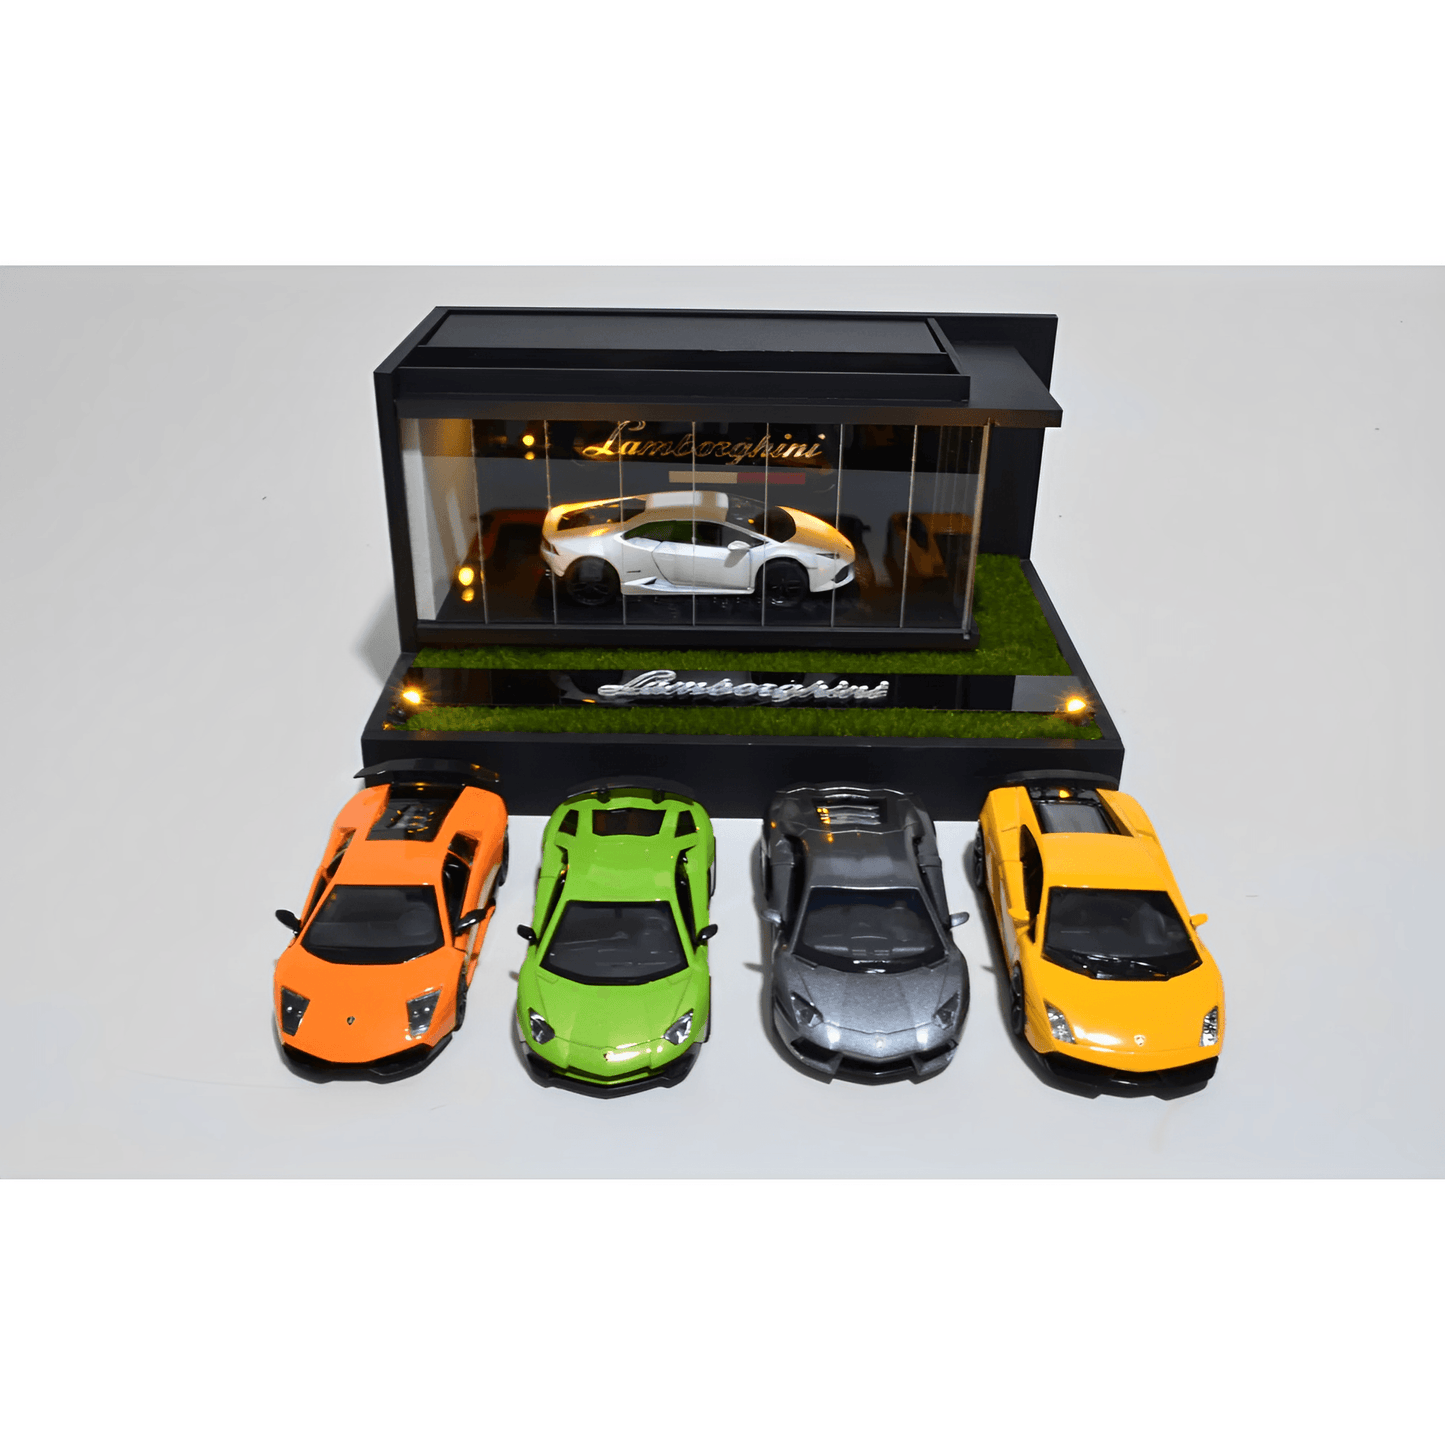 Lamborghini Dealership Exhibitor For Model Cars - Exclusive Item - Handmade - Brazilian Shop